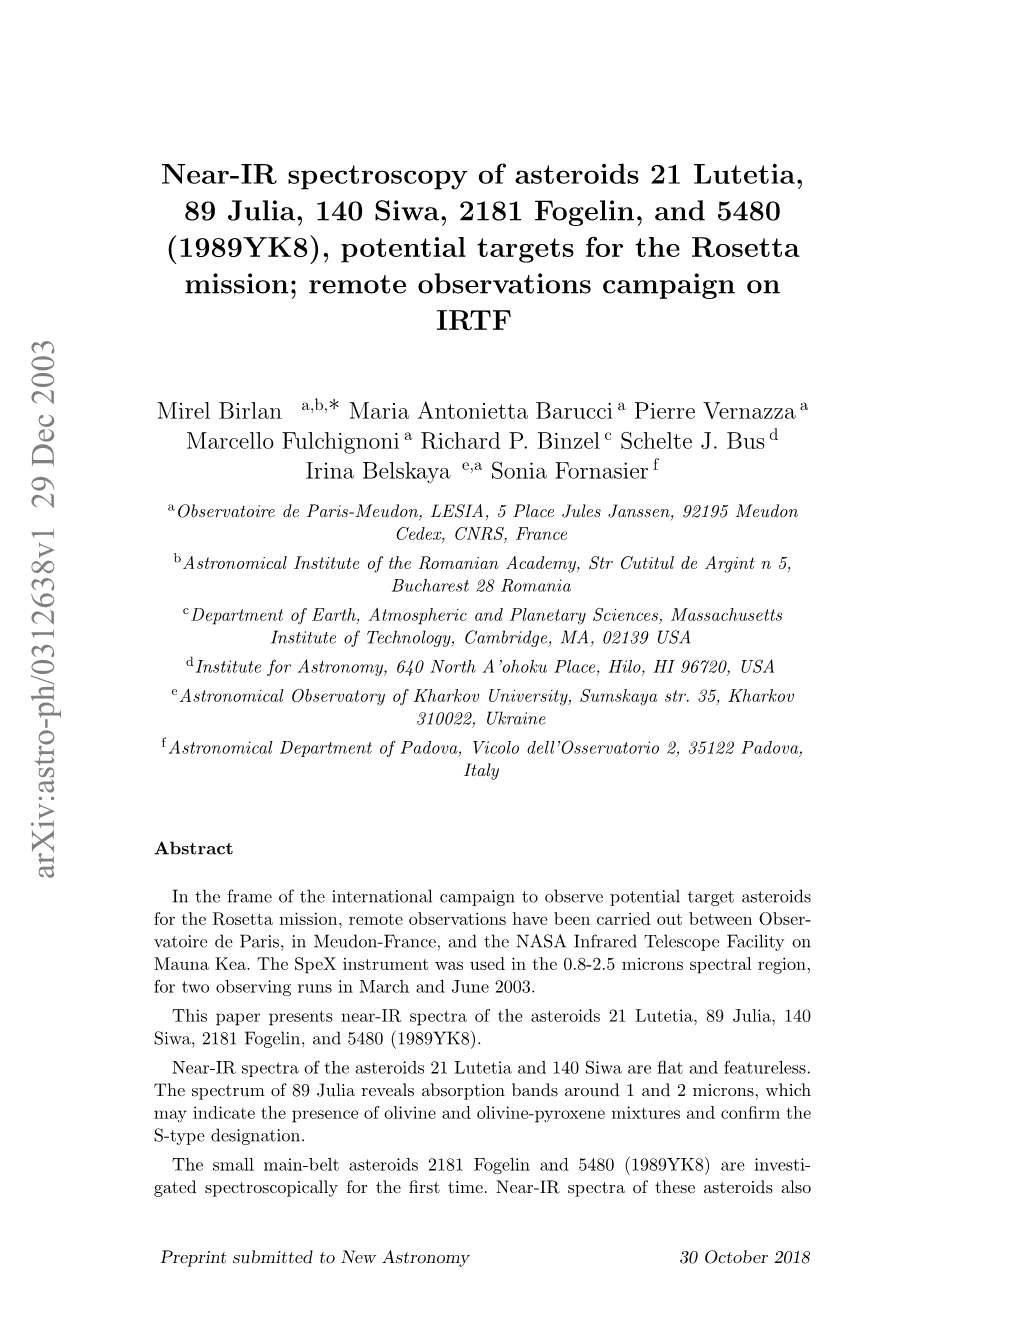 Near-IR Spectroscopy of Asteroids 21 Lutetia, 89 Julia, 140 Siwa, 2181